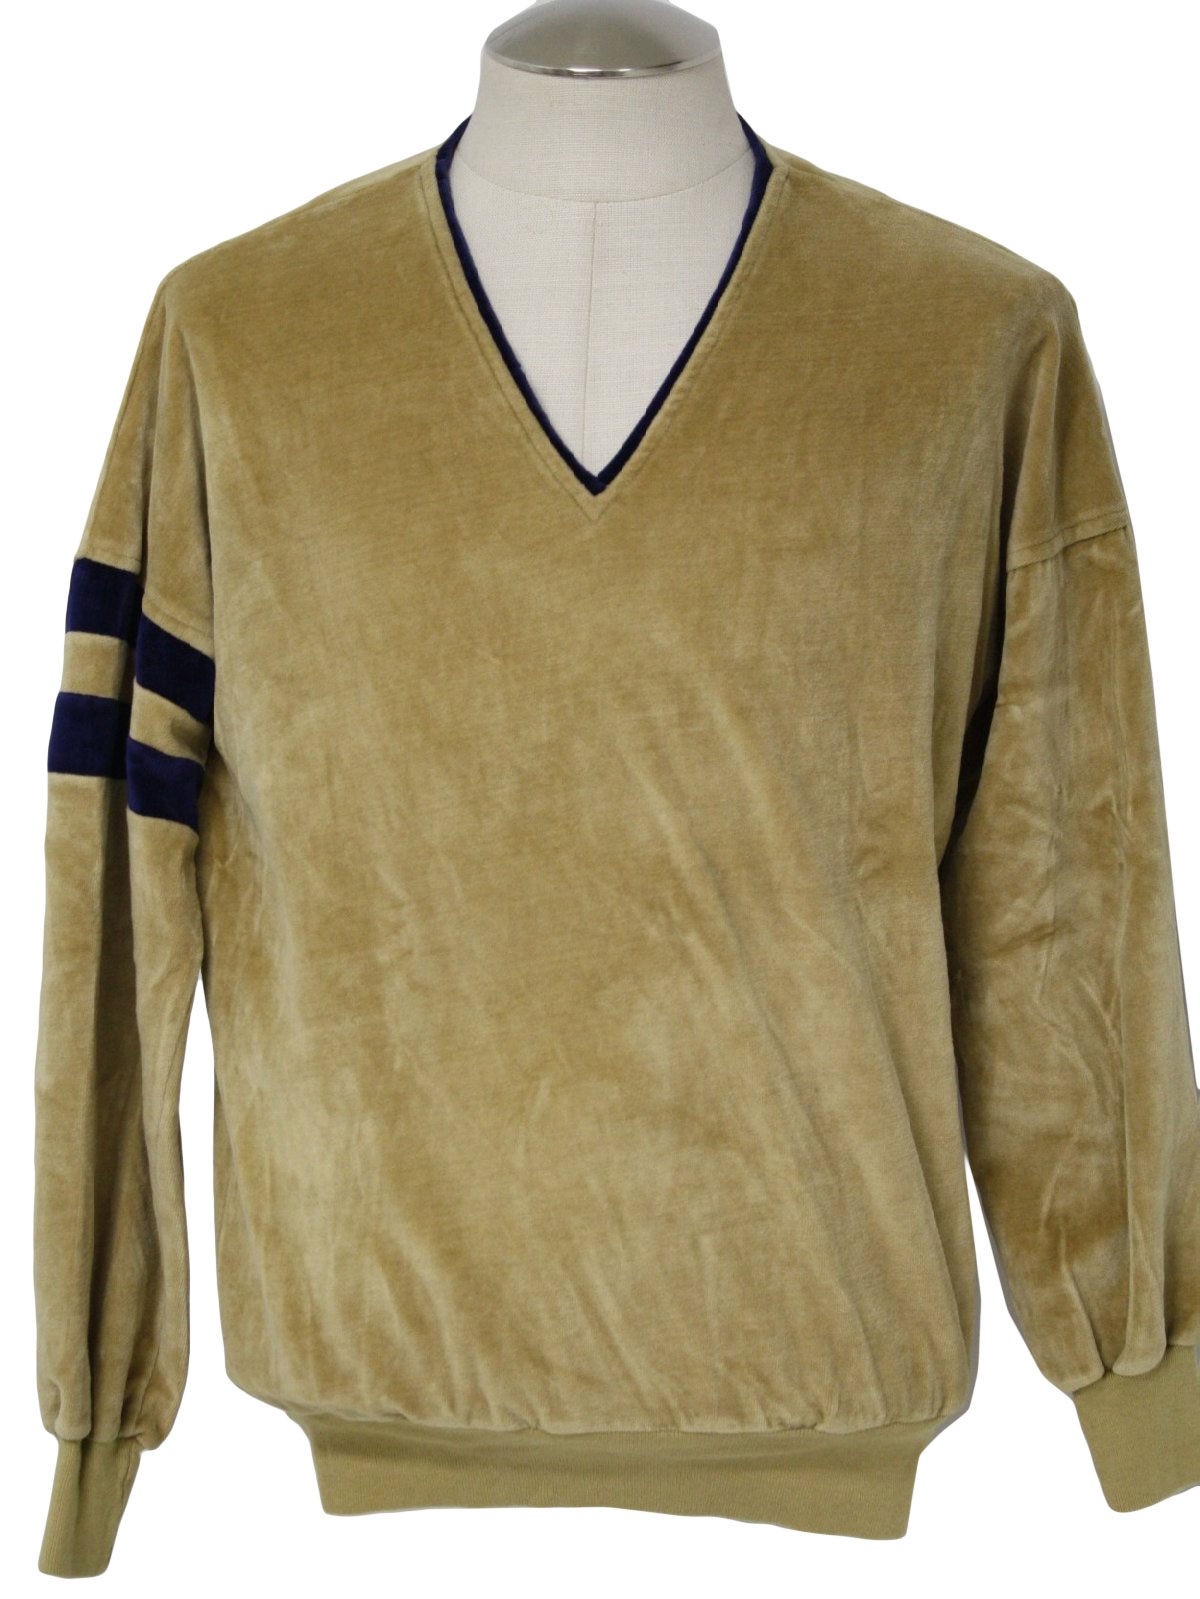 Retro 70's Velour Shirt: 70s -UltraSport Ltd- Mens wheat and navy blue ...